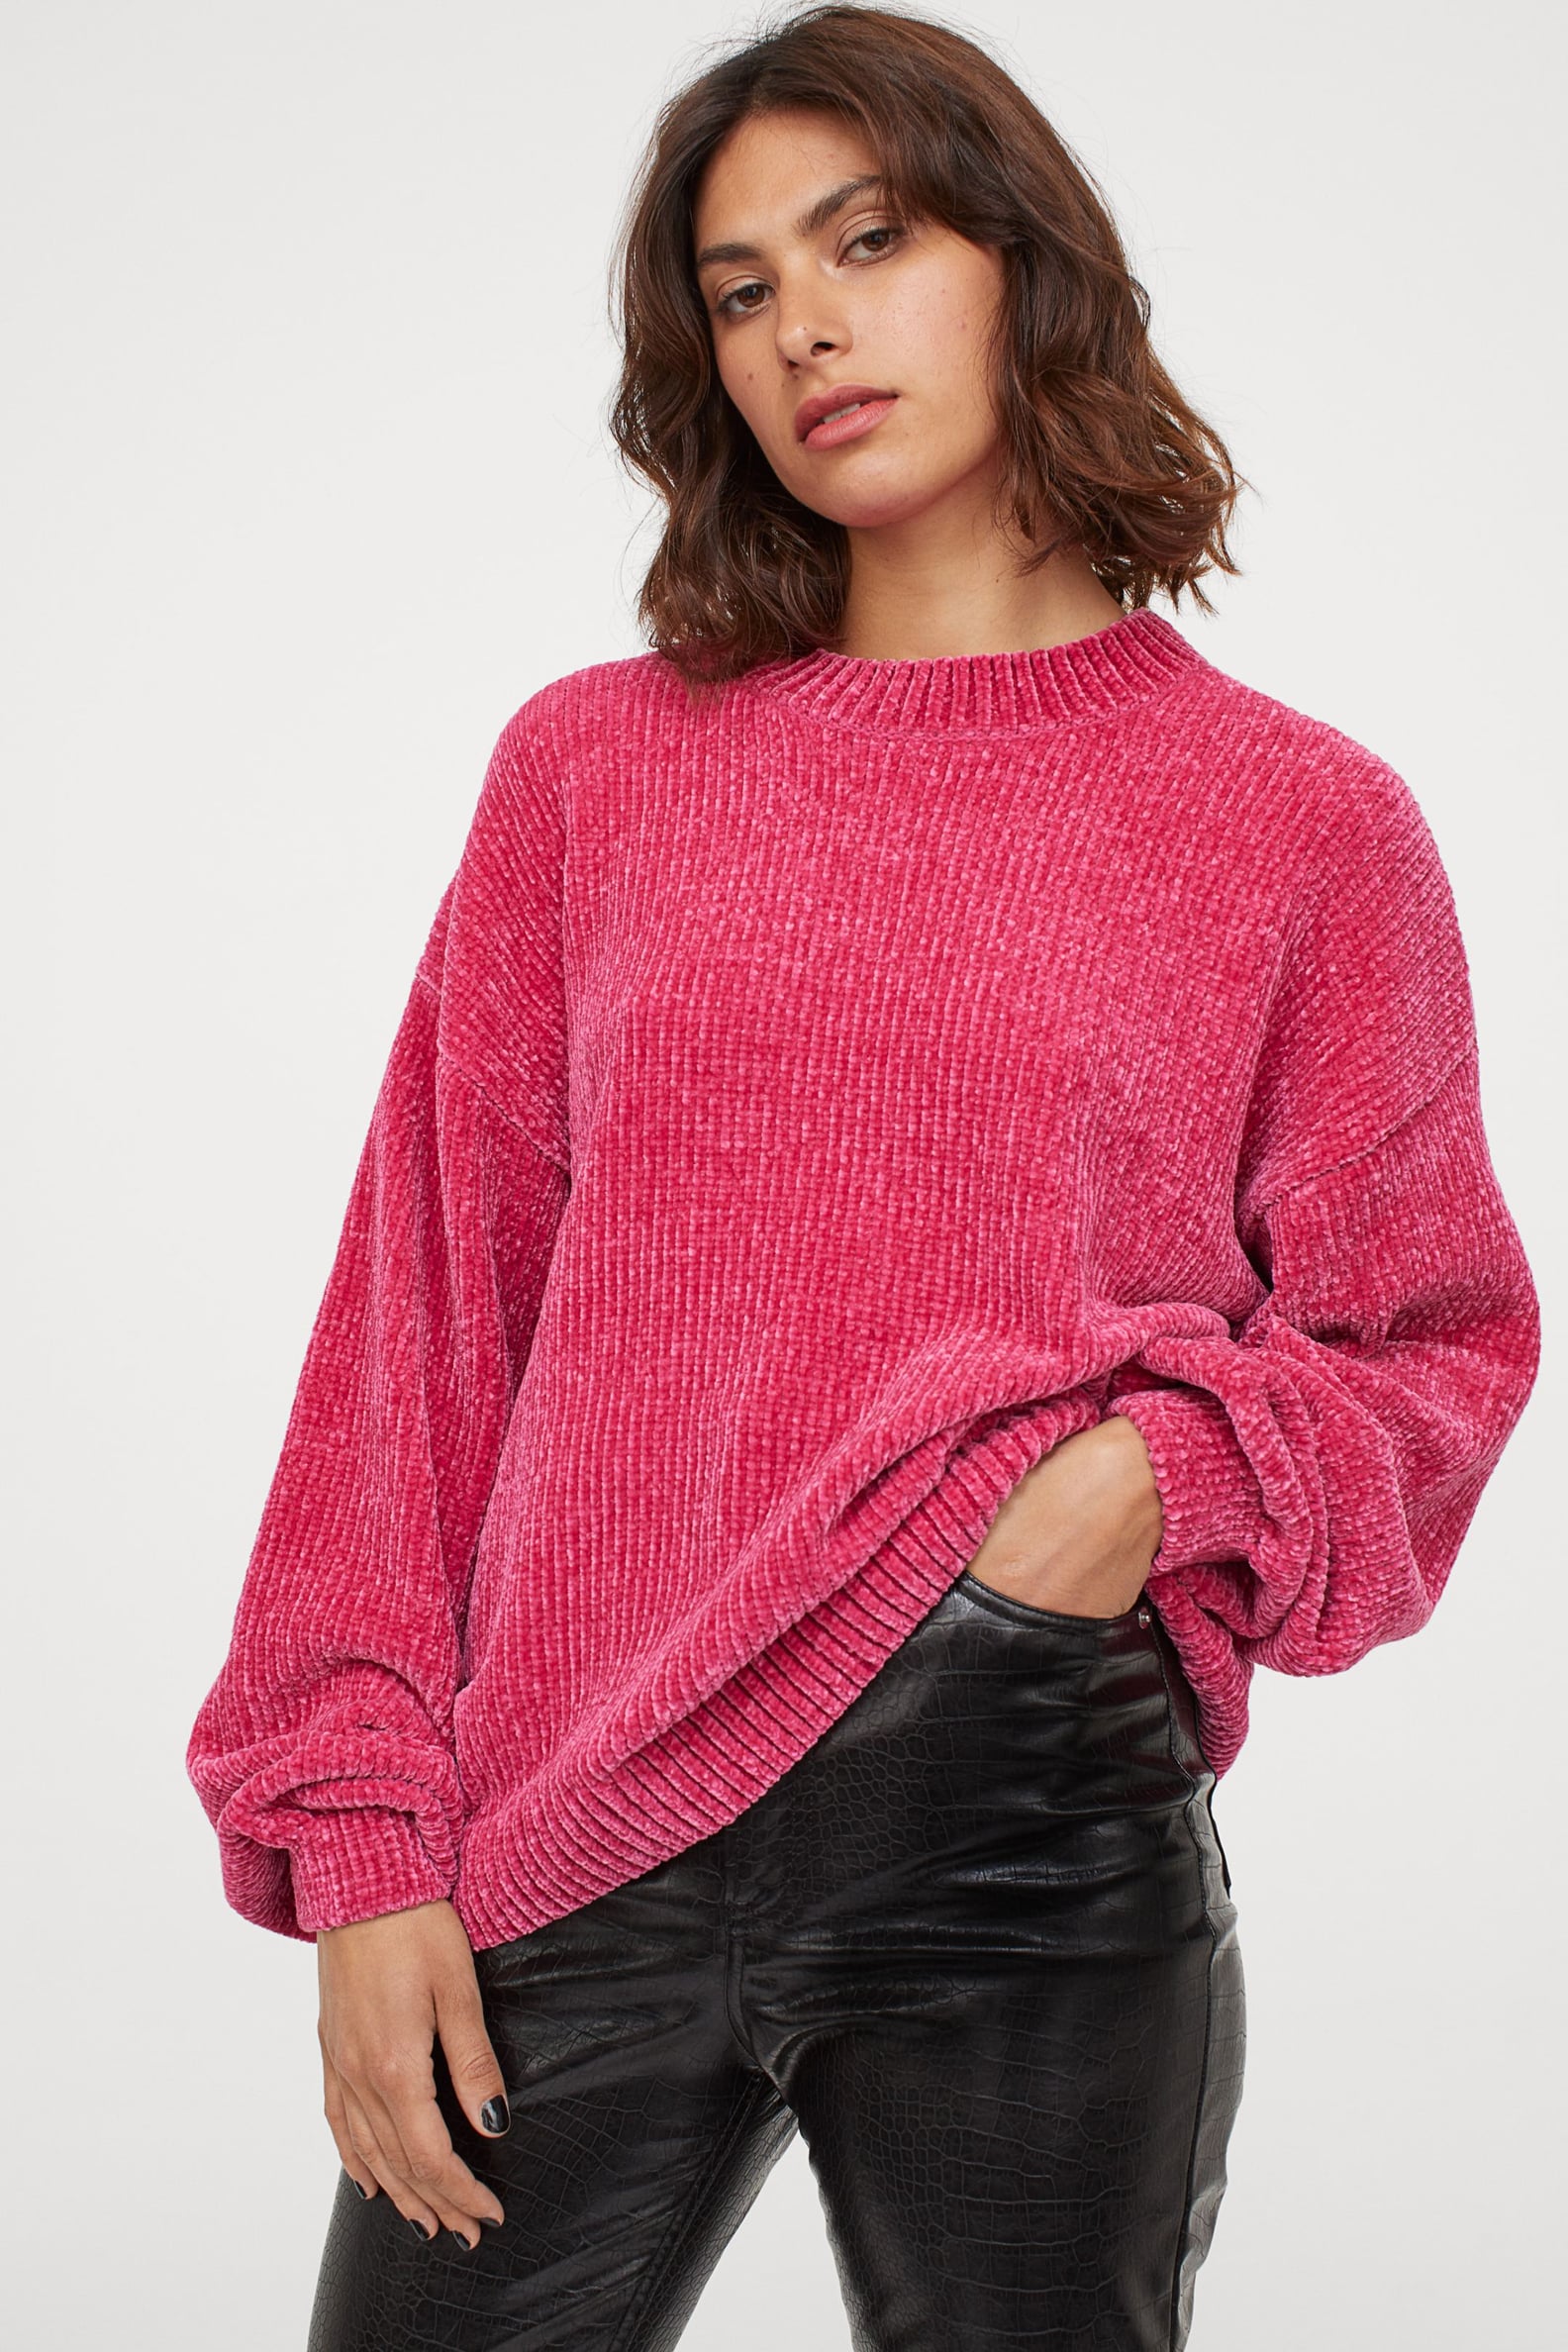 Best Cozy Sweaters | POPSUGAR Fashion